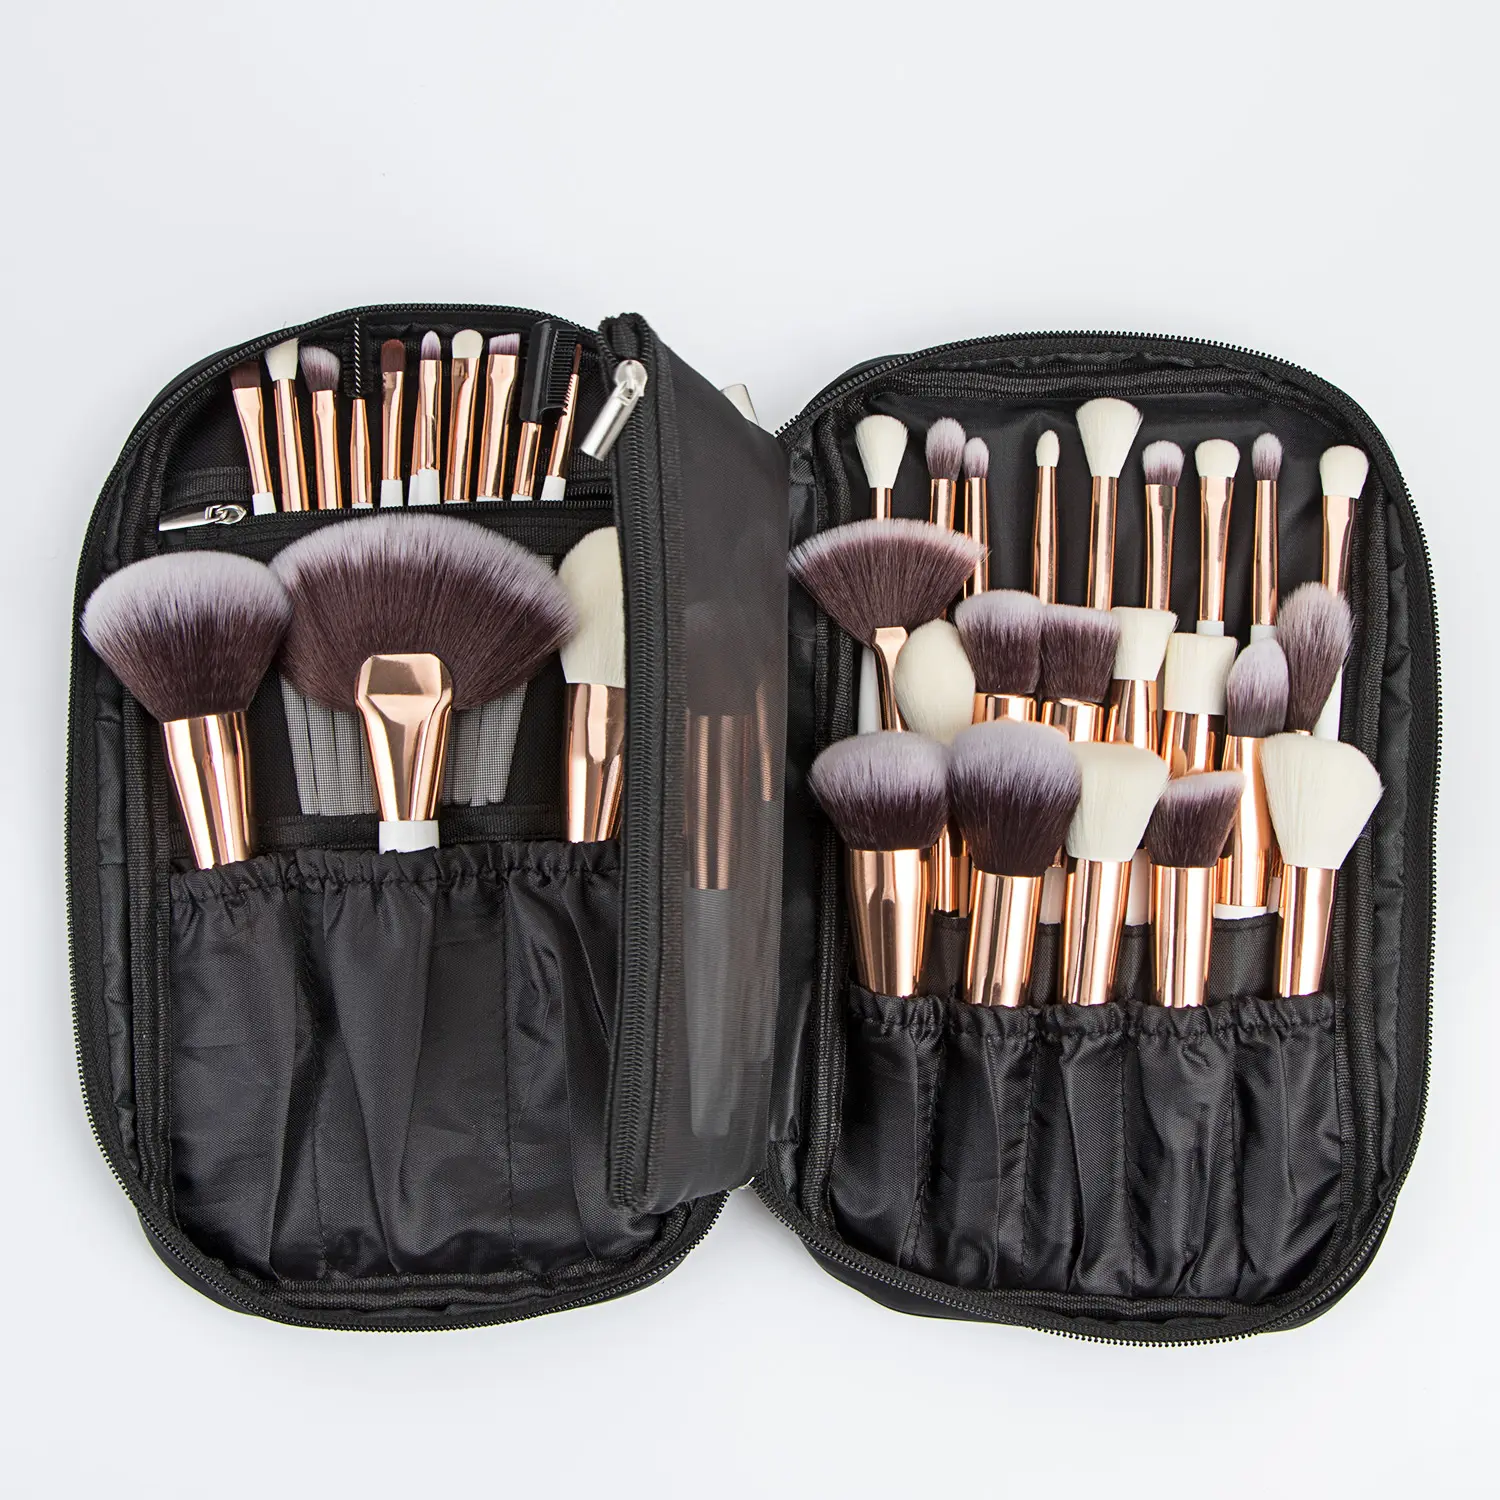 Professional Makeup Brushes Set, Super Soft Face Repair Powder Blush Foundation Cosmetics Brush Beauty Make Up Tools/